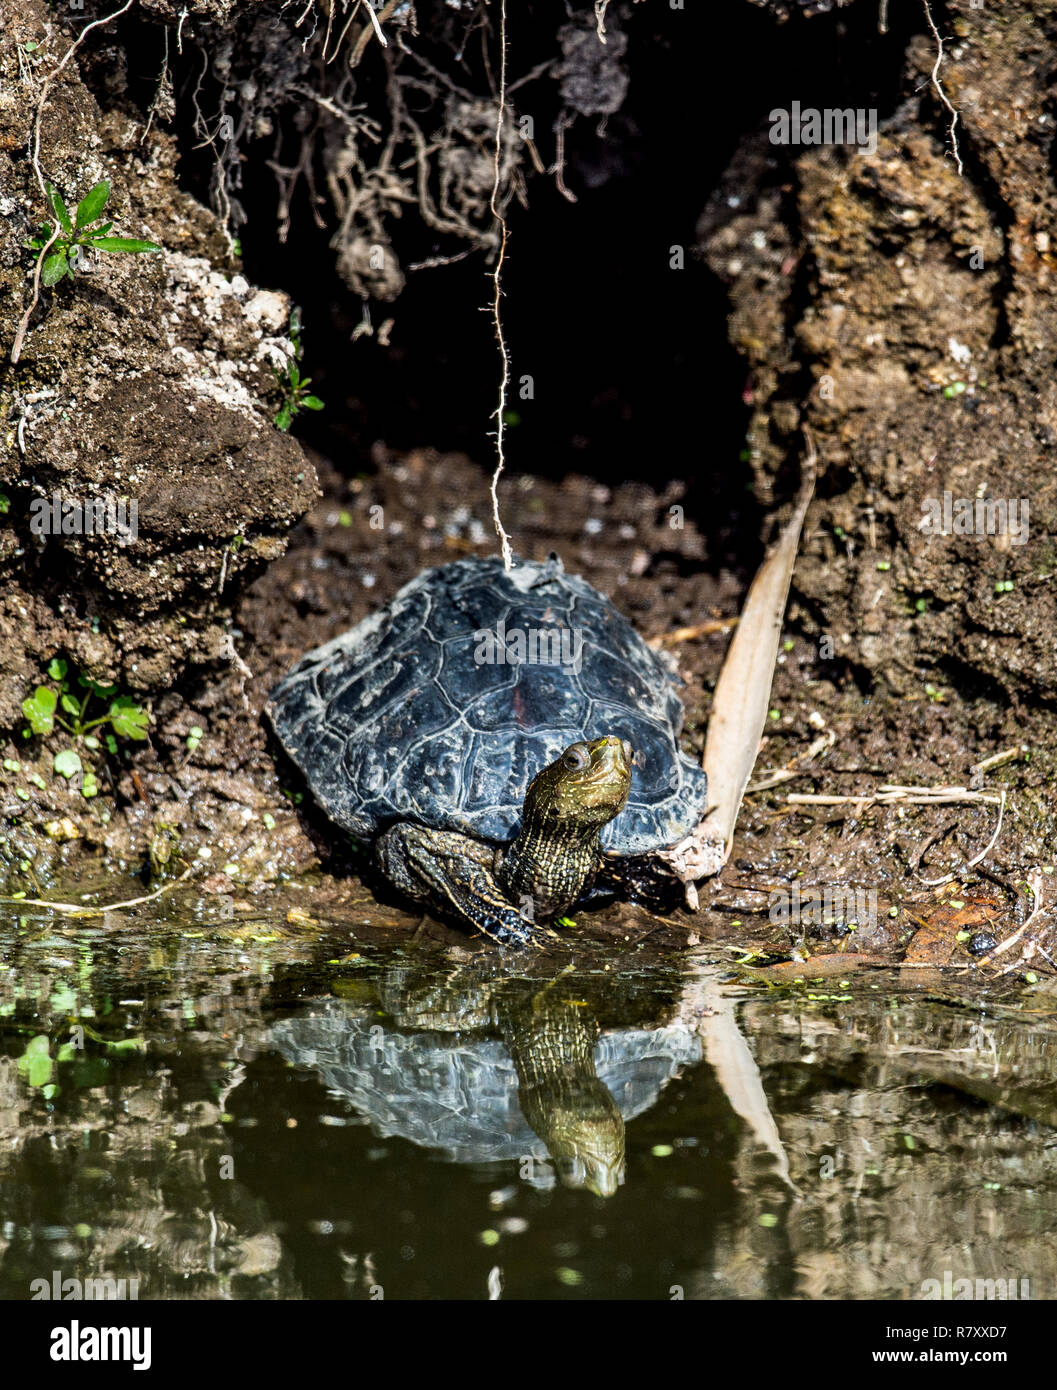 The Caspian turtle or striped-neck terrapin (Mauremys caspica) in natural habitat Stock Photo